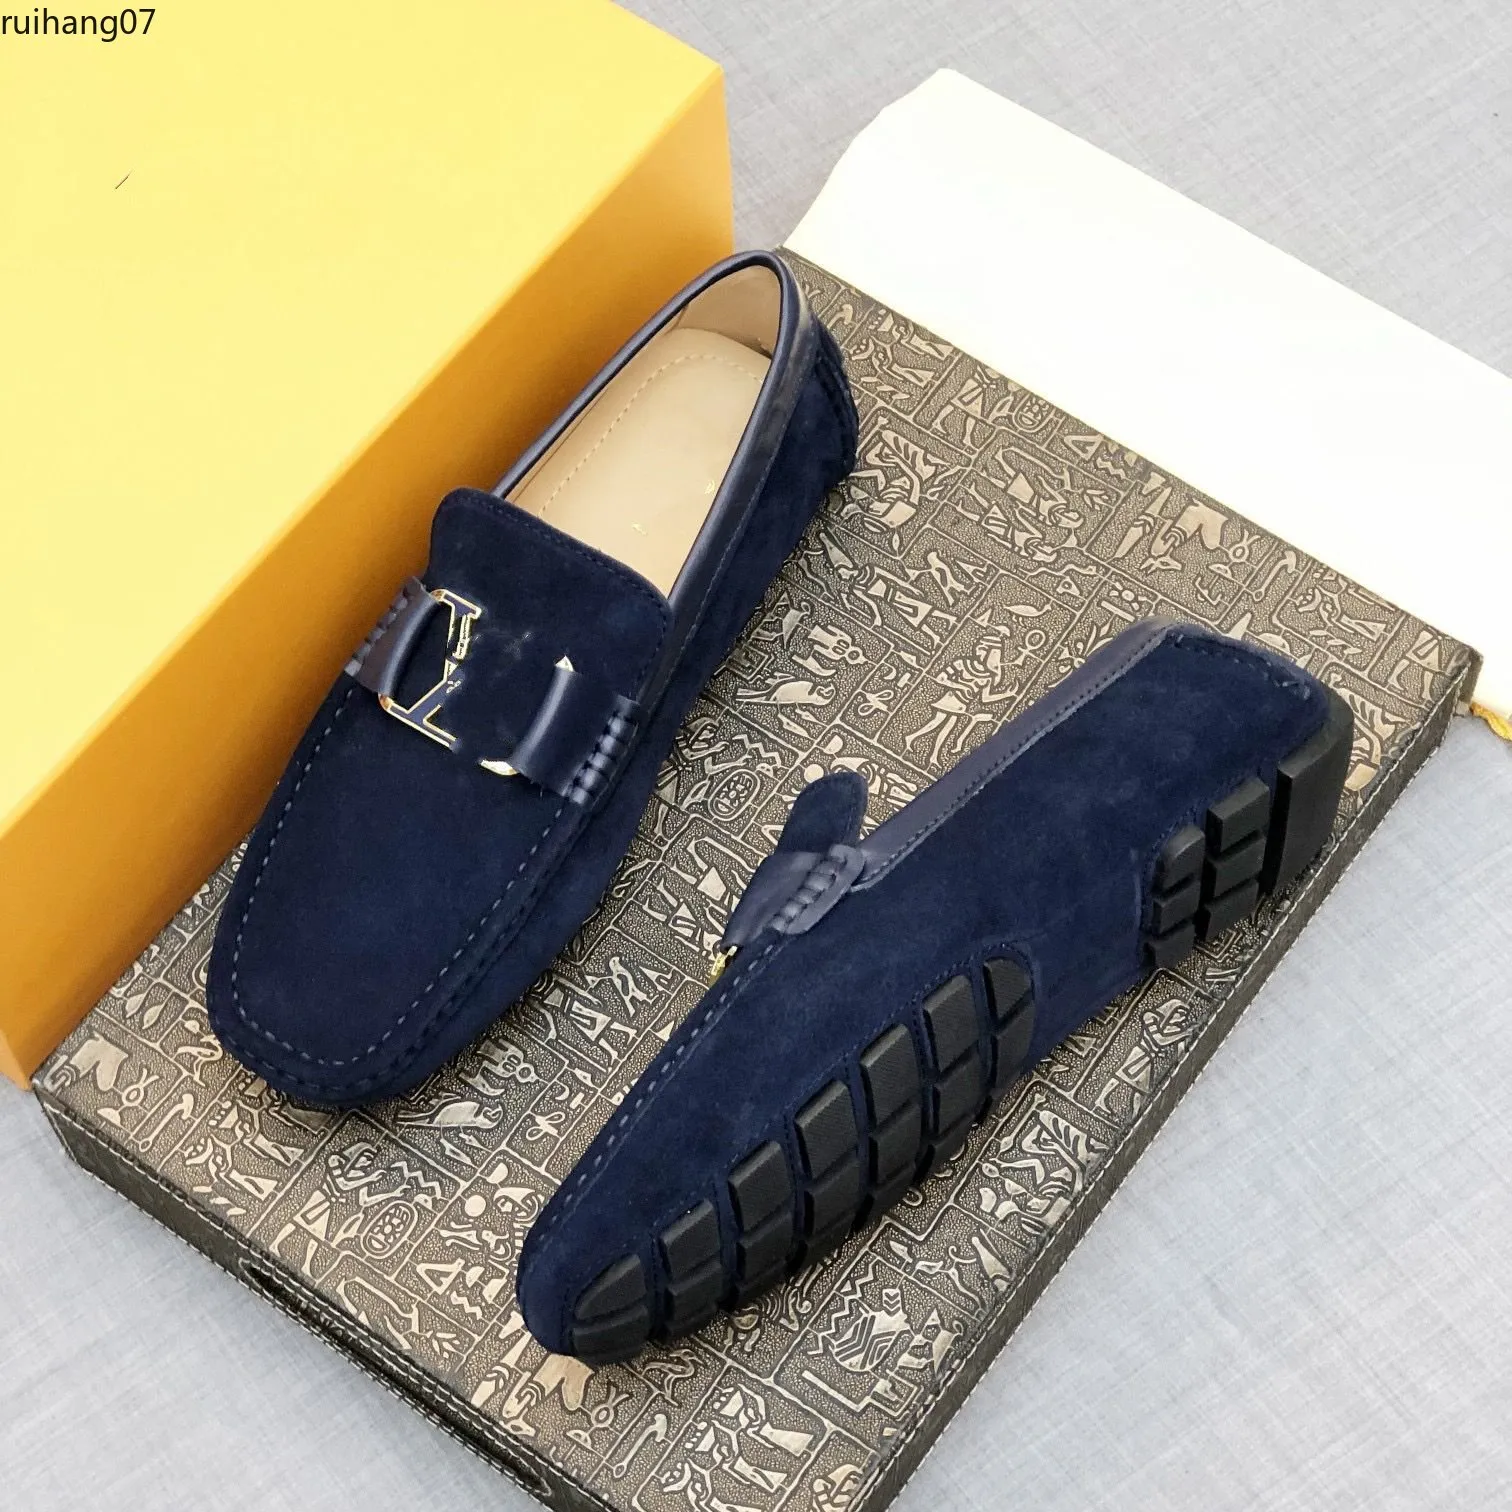 GENUINE Cow leather MENS Loafers Fashion Handmade Moccasins LEATHER LUXURY DESIGNER MEN Flats Blue Slip On MEN's Boat SHOE PLUS SIZE kmjkh rh700002